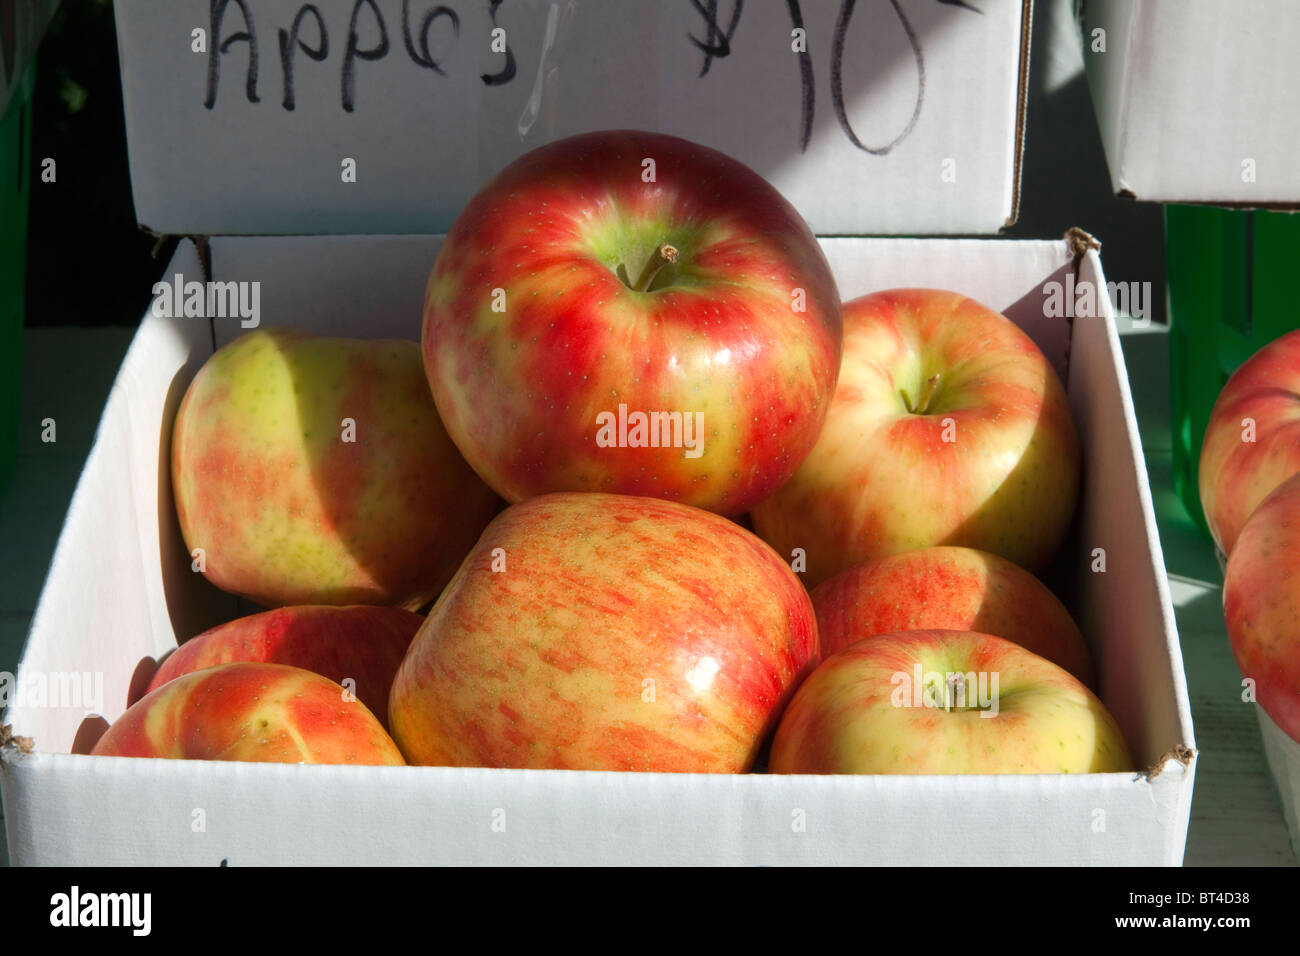 Honeycrisp Apple Box - Fresh Michigan-Grown Apples Delivered